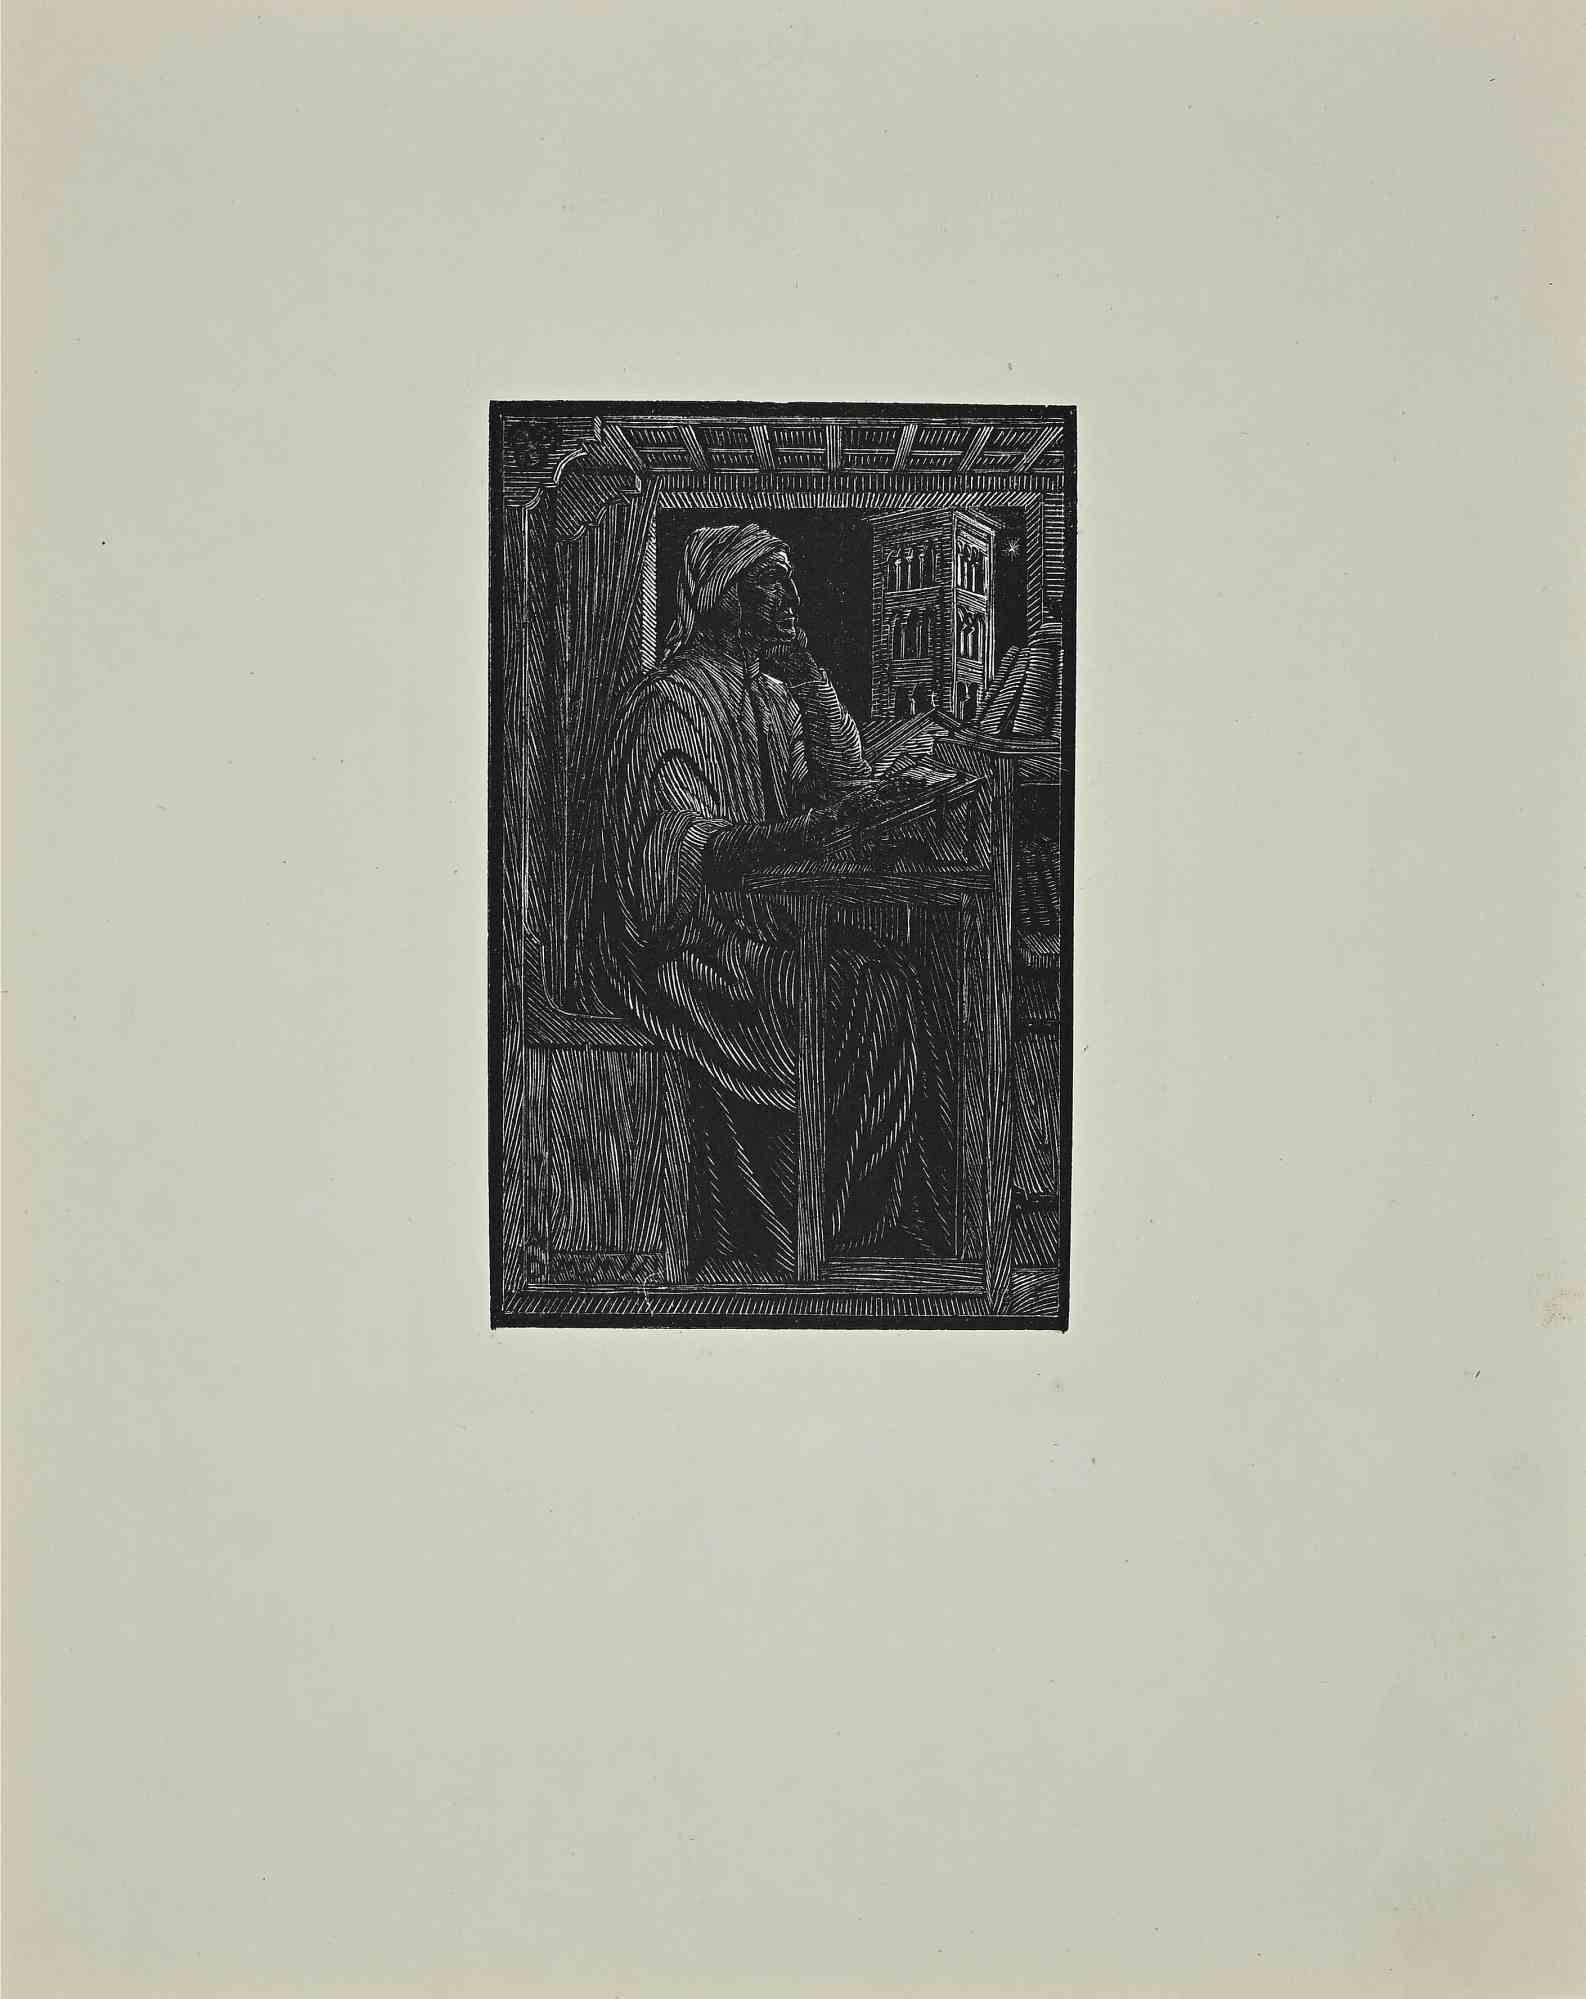 Unknown Figurative Print - Dante - Original Woodcut by Adolfo de Karolis - Early 20th Century